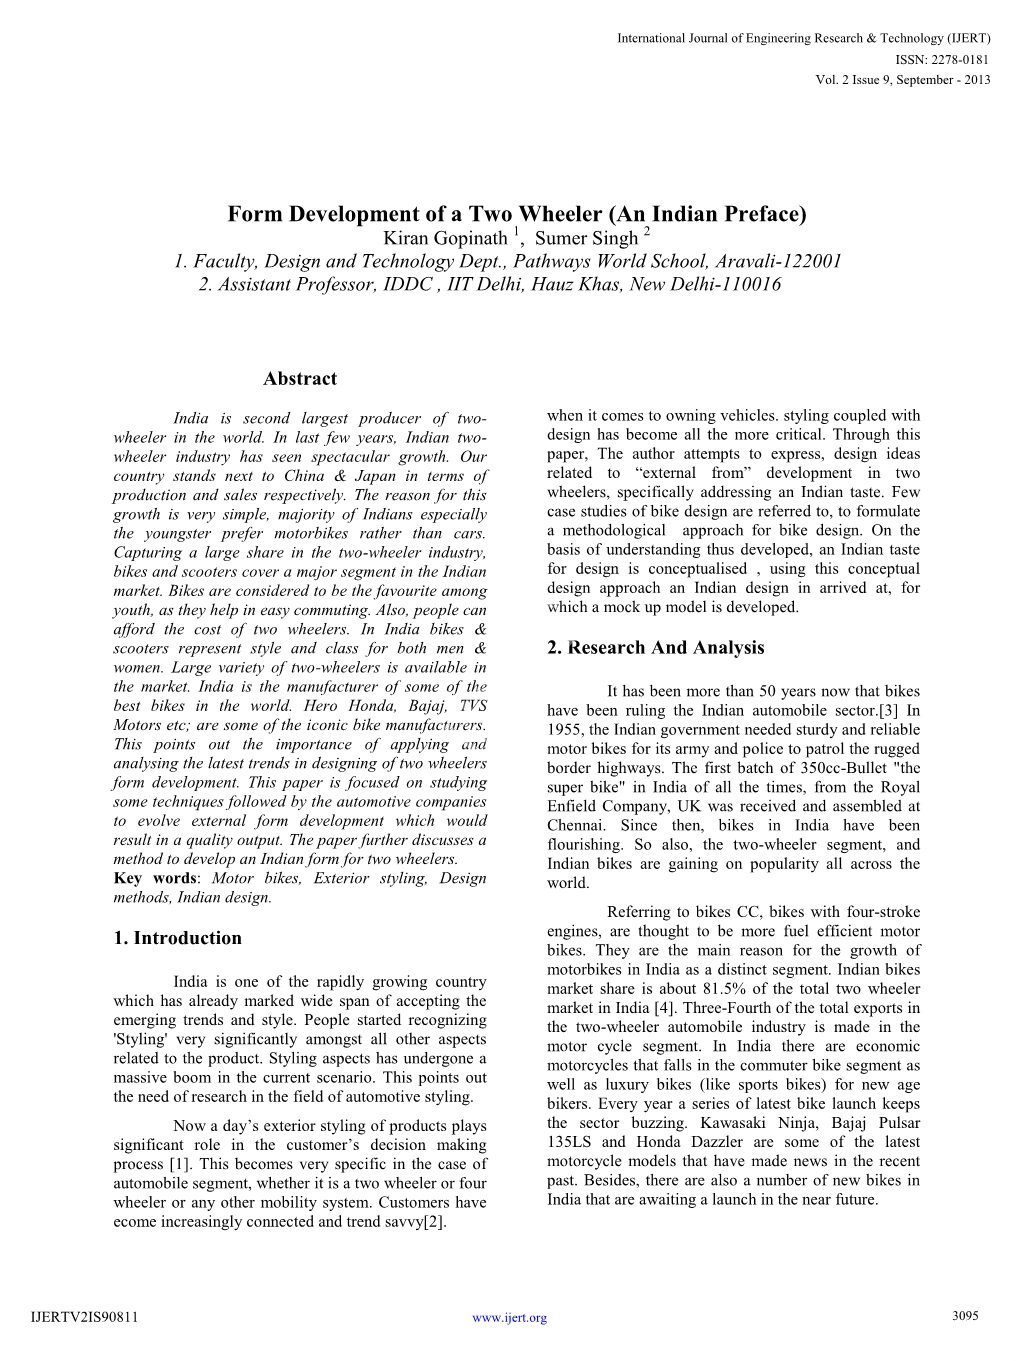 Form Development of a Two Wheeler (An Indian Preface) Kiran Gopinath 1, Sumer Singh 2 1